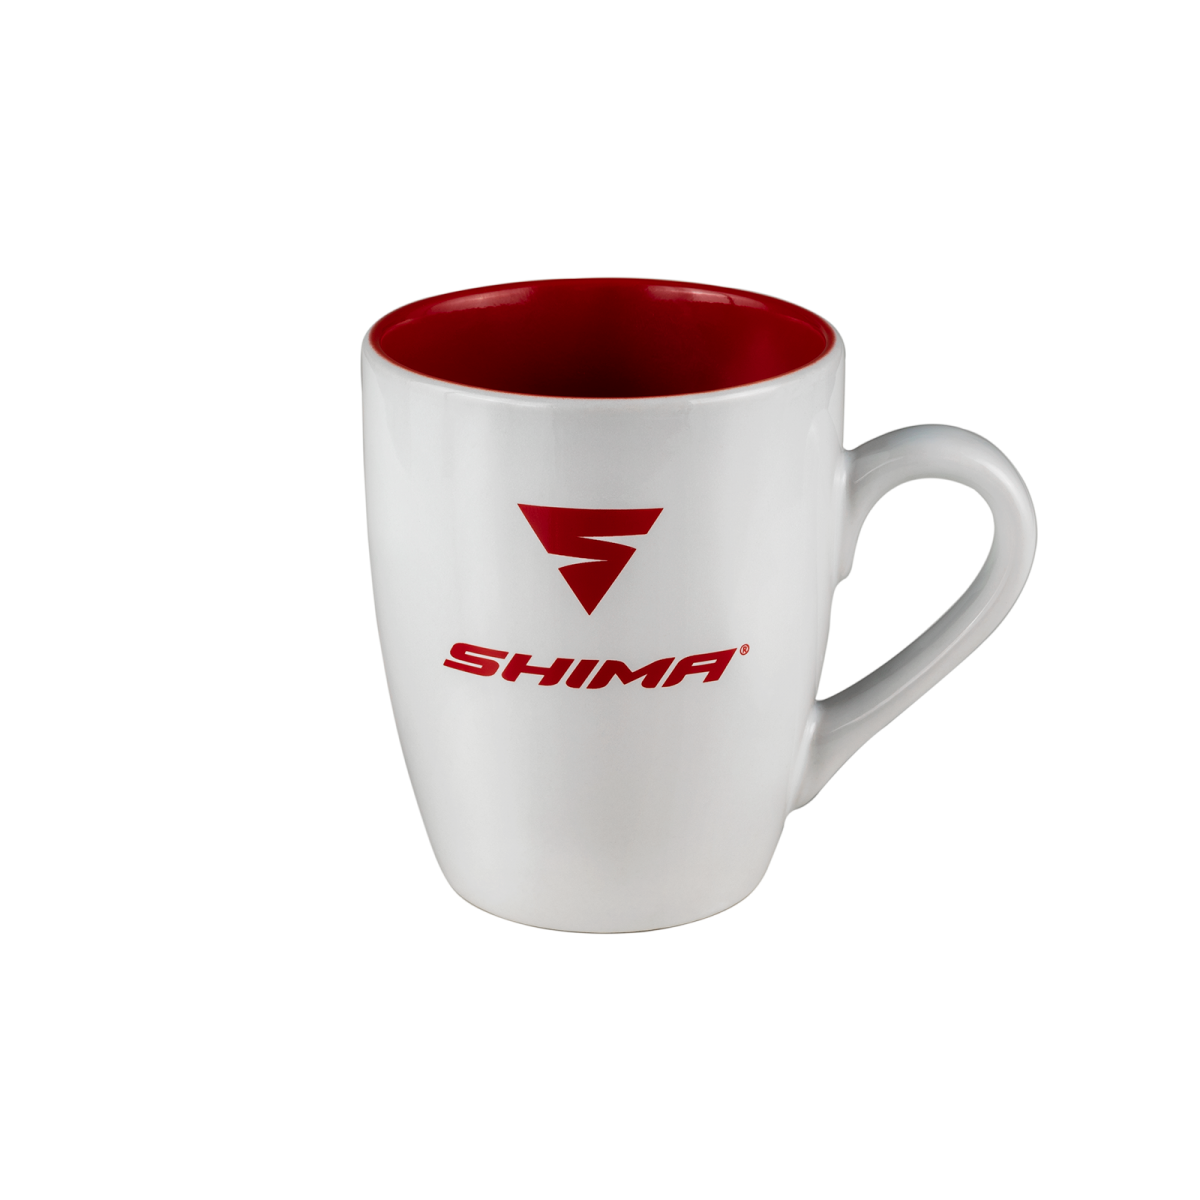 Red and white mug with shima logo